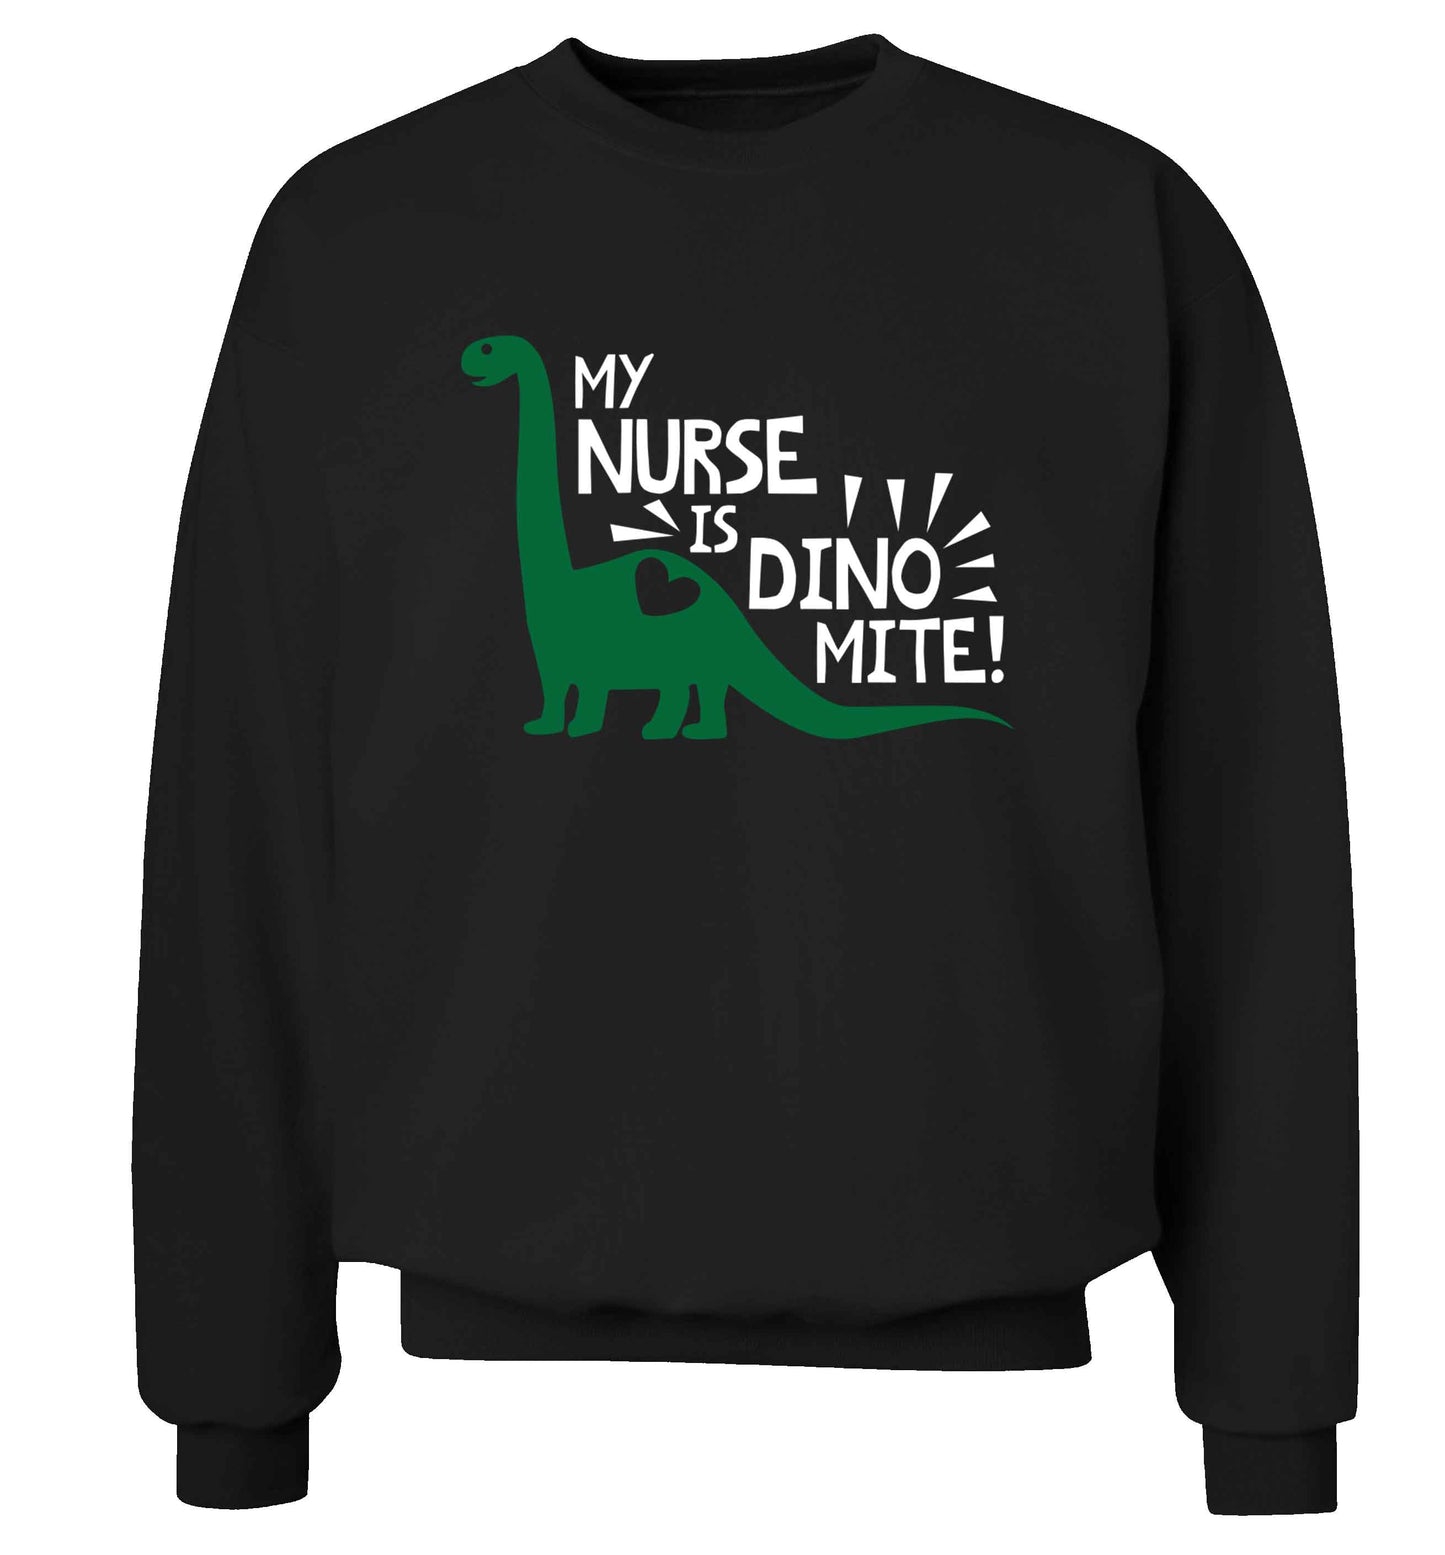 My nurse is dinomite! Adult's unisex black Sweater 2XL